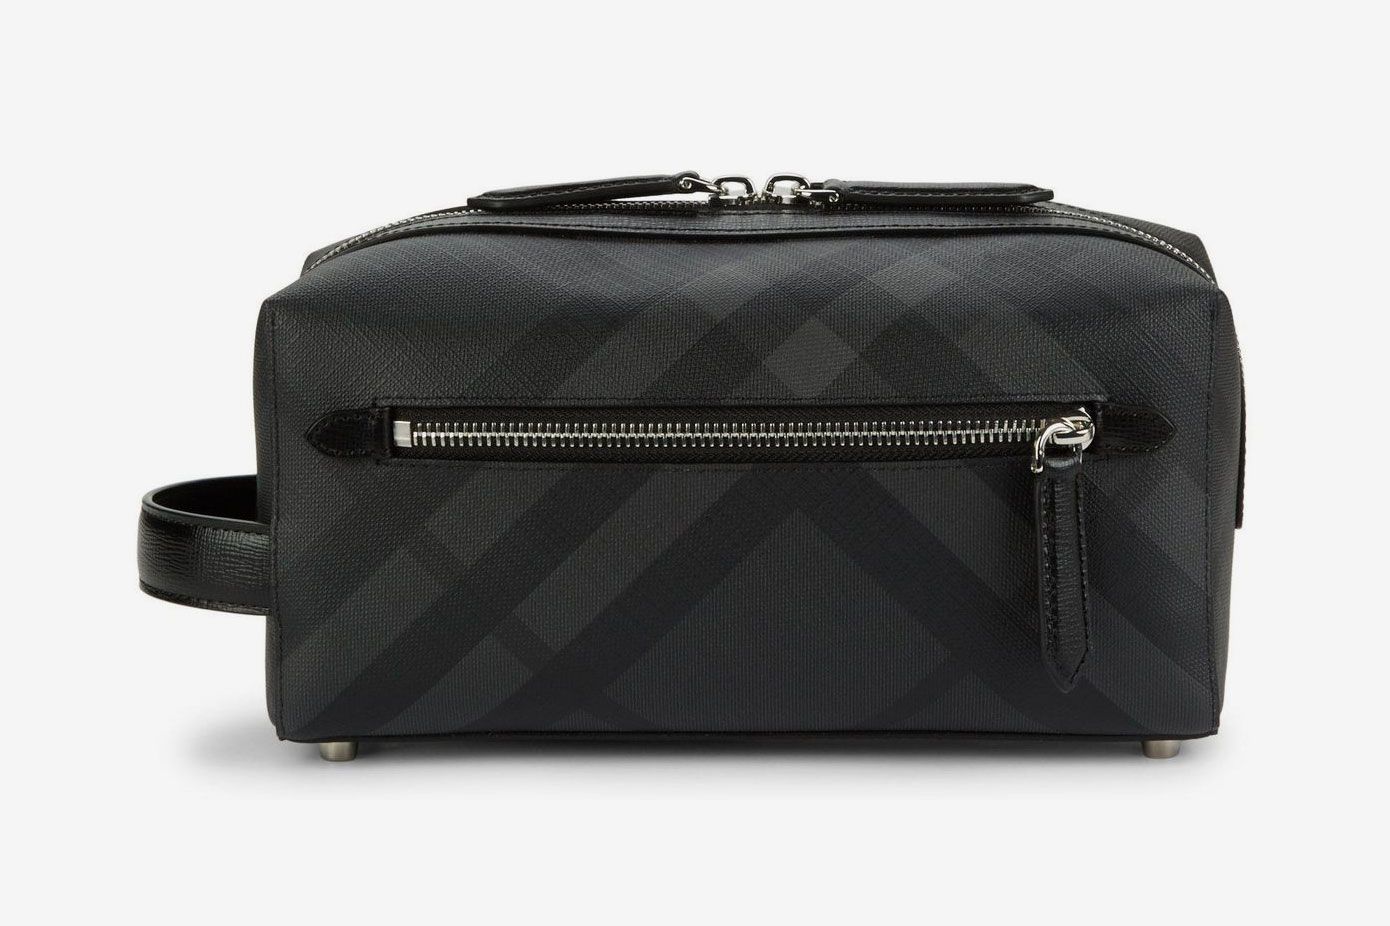 Saks Fifth Avenue Burberry Handbags | IQS Executive